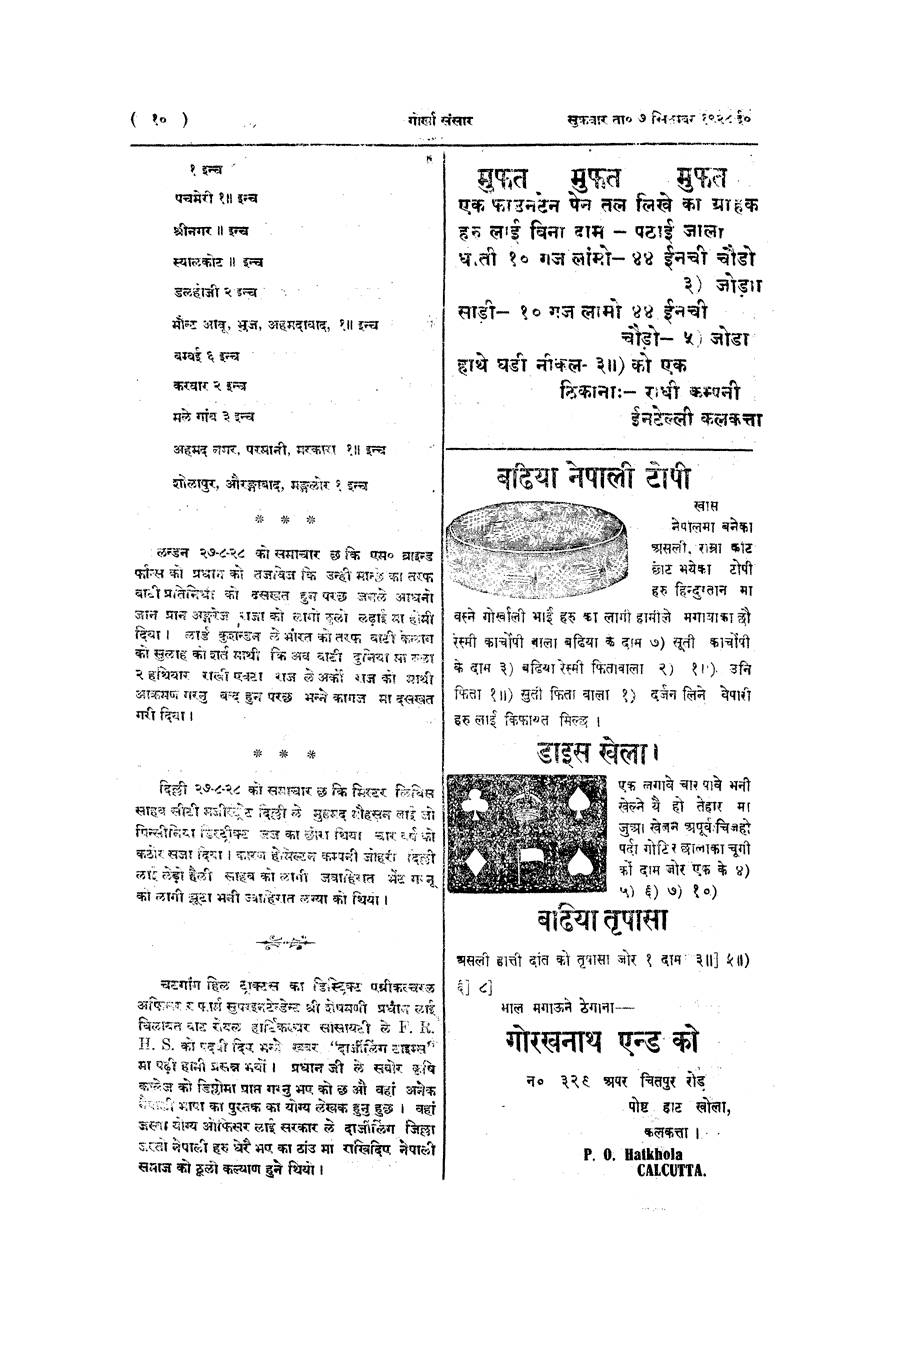 Gorkha Sansar, 7 Sept 1928, page 11